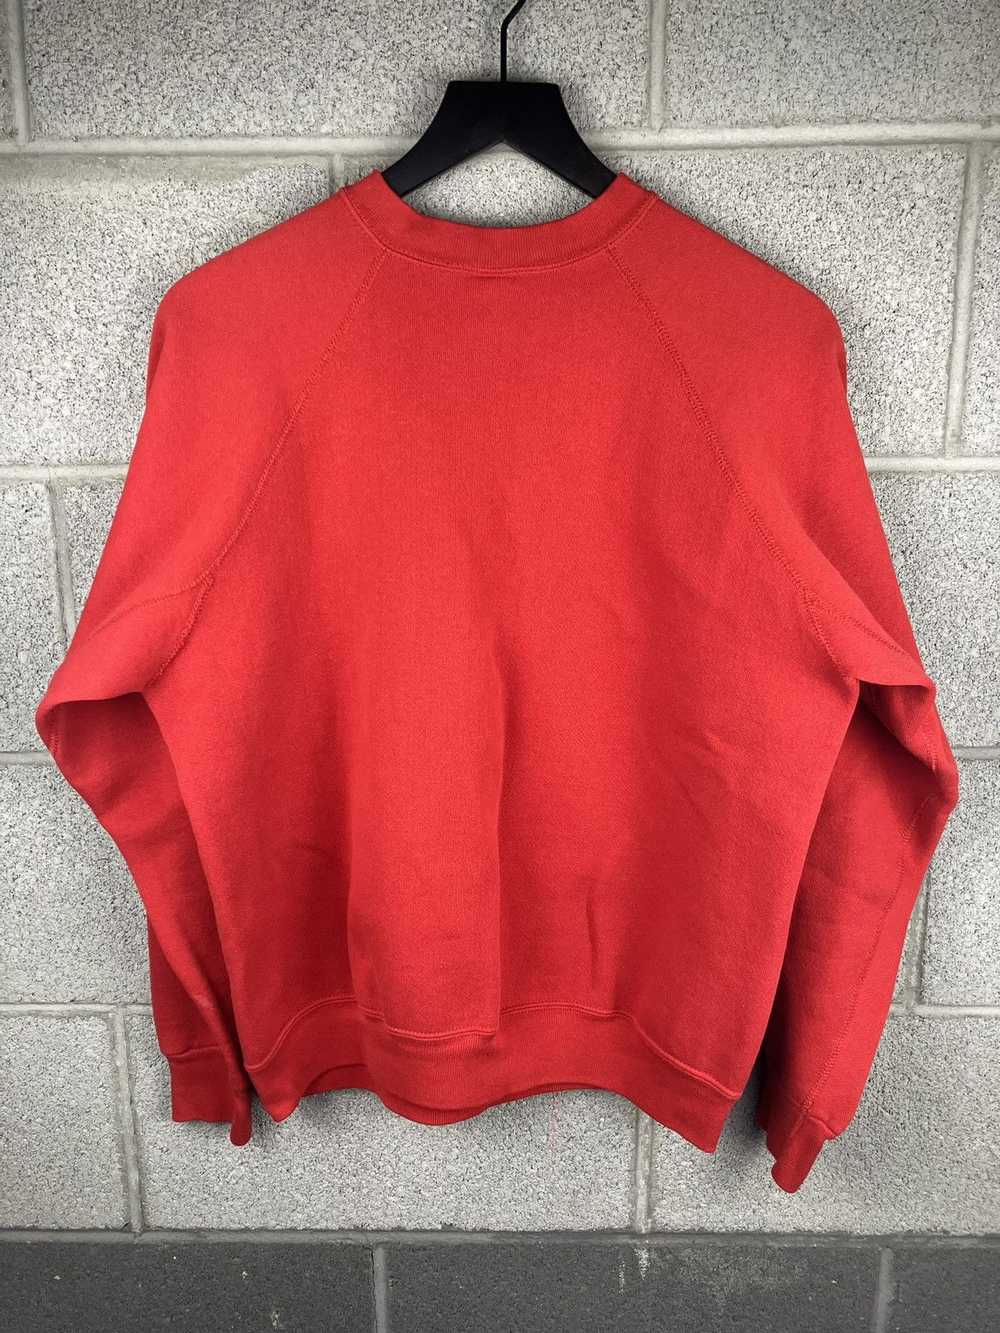 Vintage Vintage 1990s Athletic Crewneck Sweatshirt - image 2